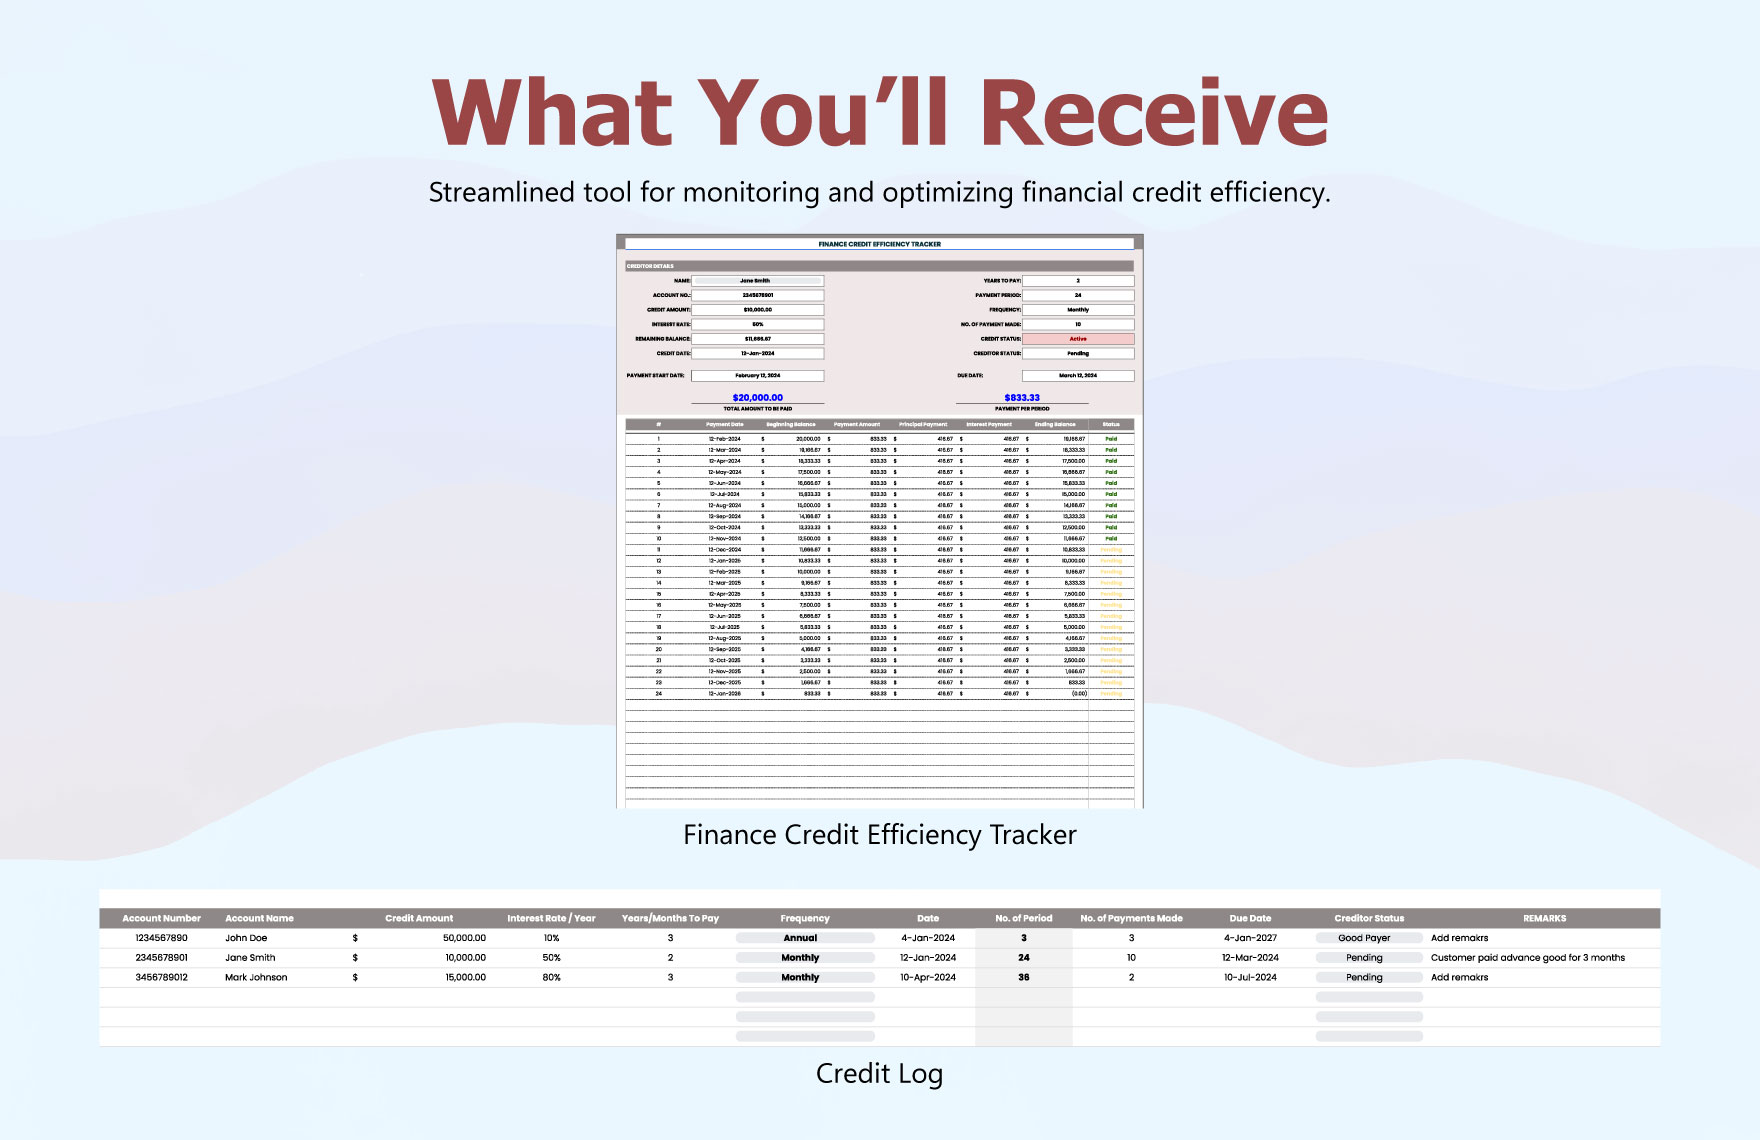 Finance Credit Efficiency Tracker Template